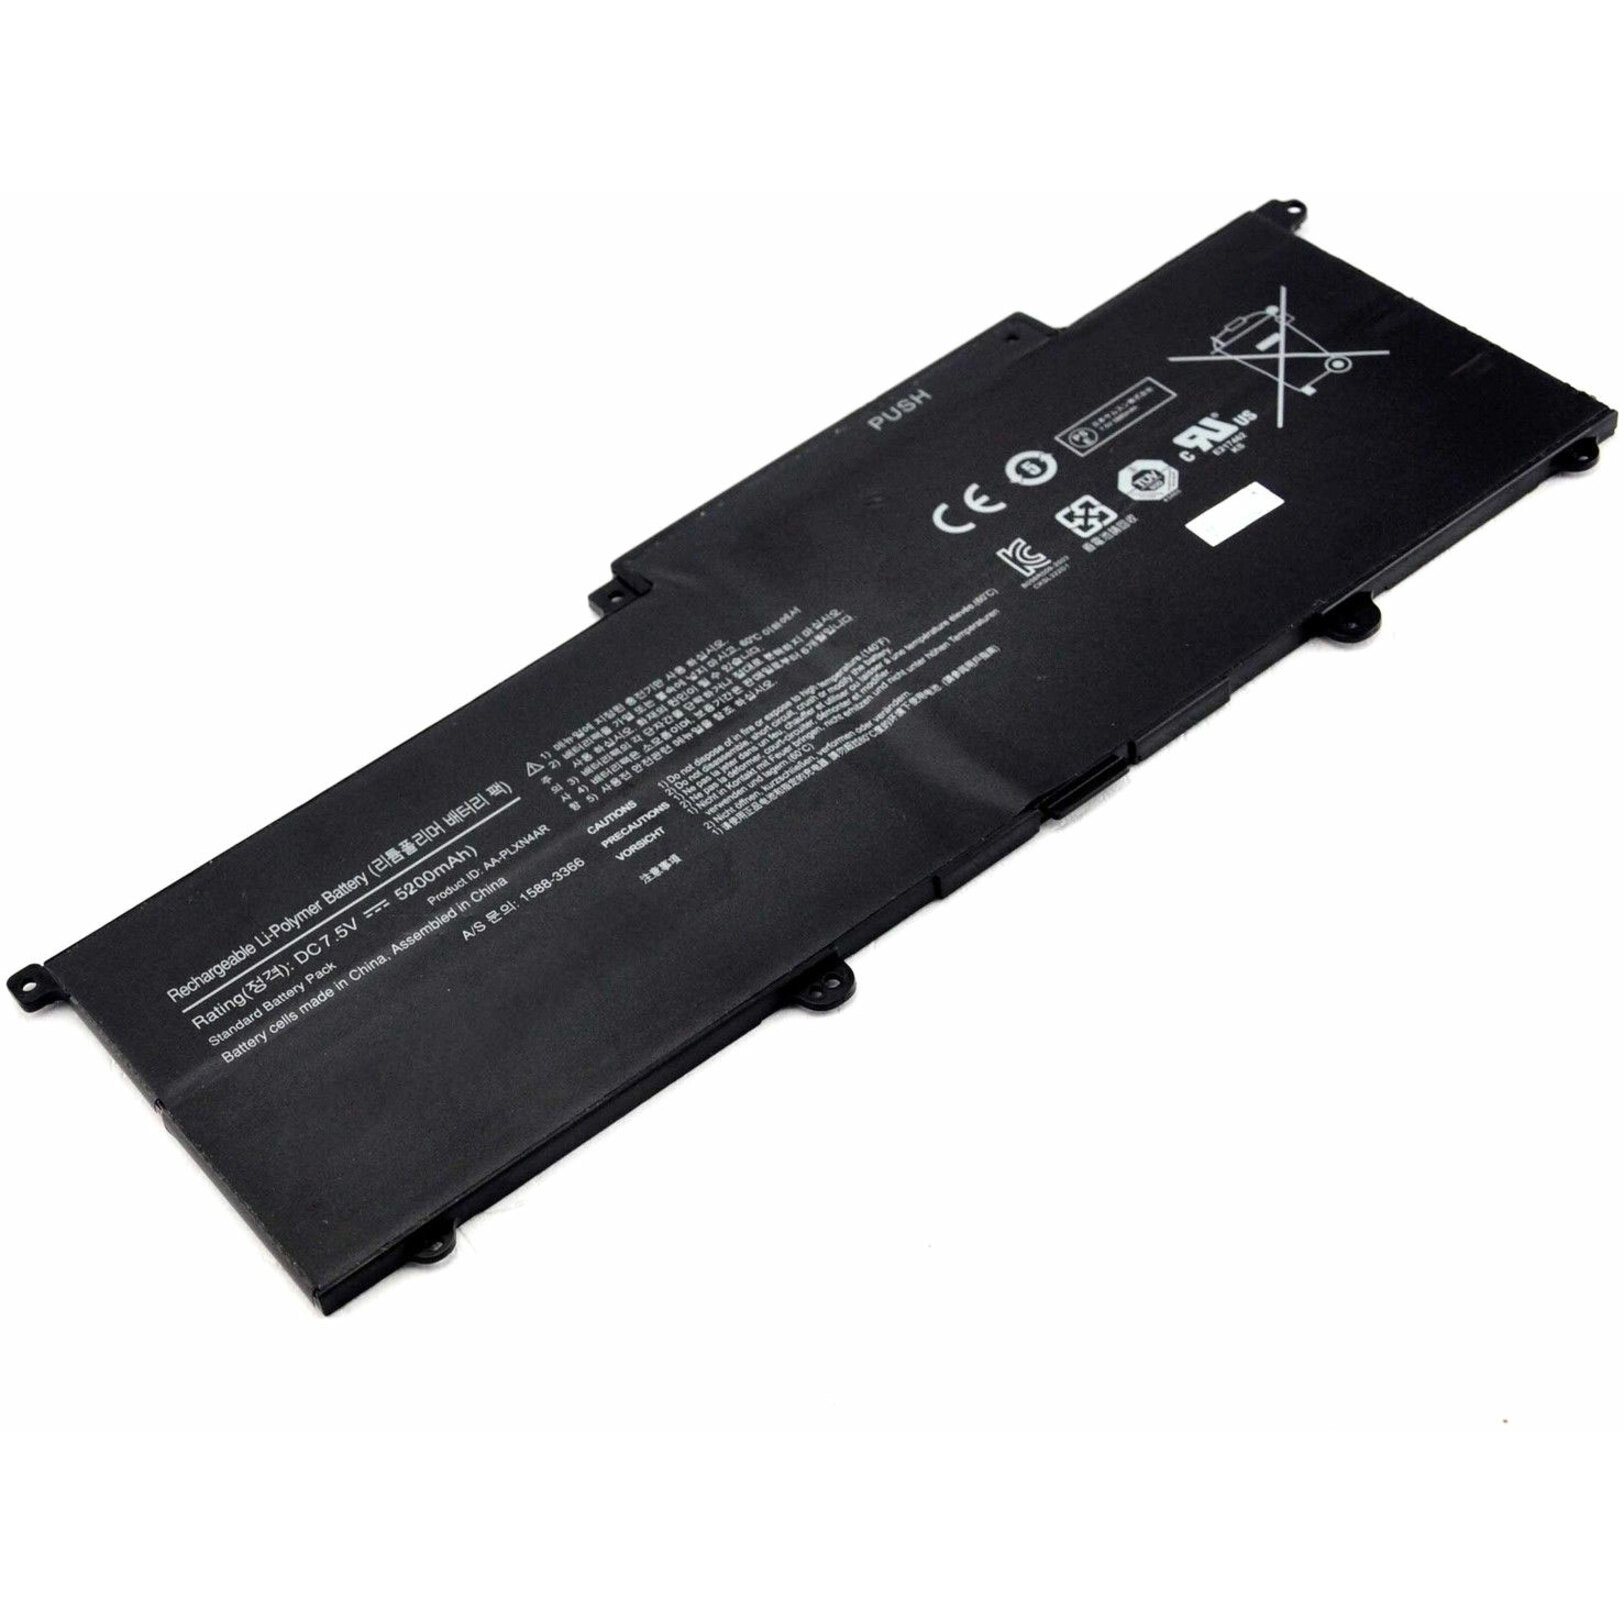 Axiom Memory Solutions LI-ION 4-Cell NB Battery SamsungBA43-00350A LI-ION 4-Cell Battery for SamsungBA43-00350A BA43-00350A-AX